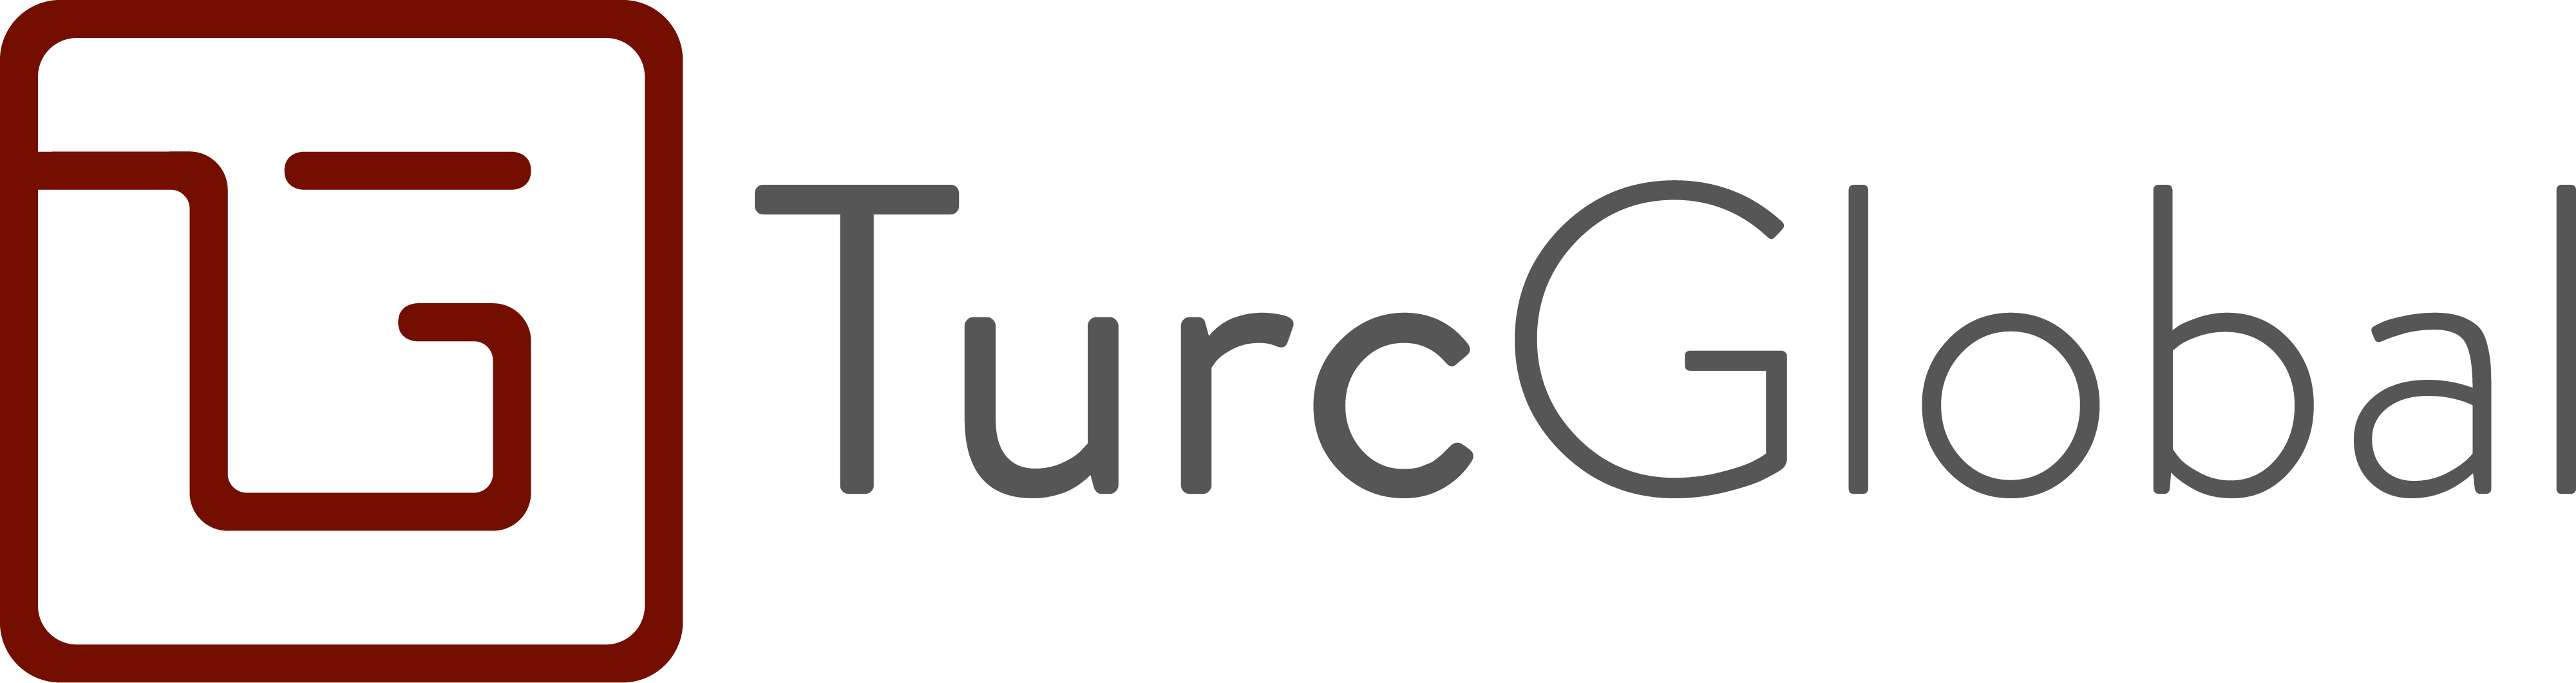 Turcglobal logo